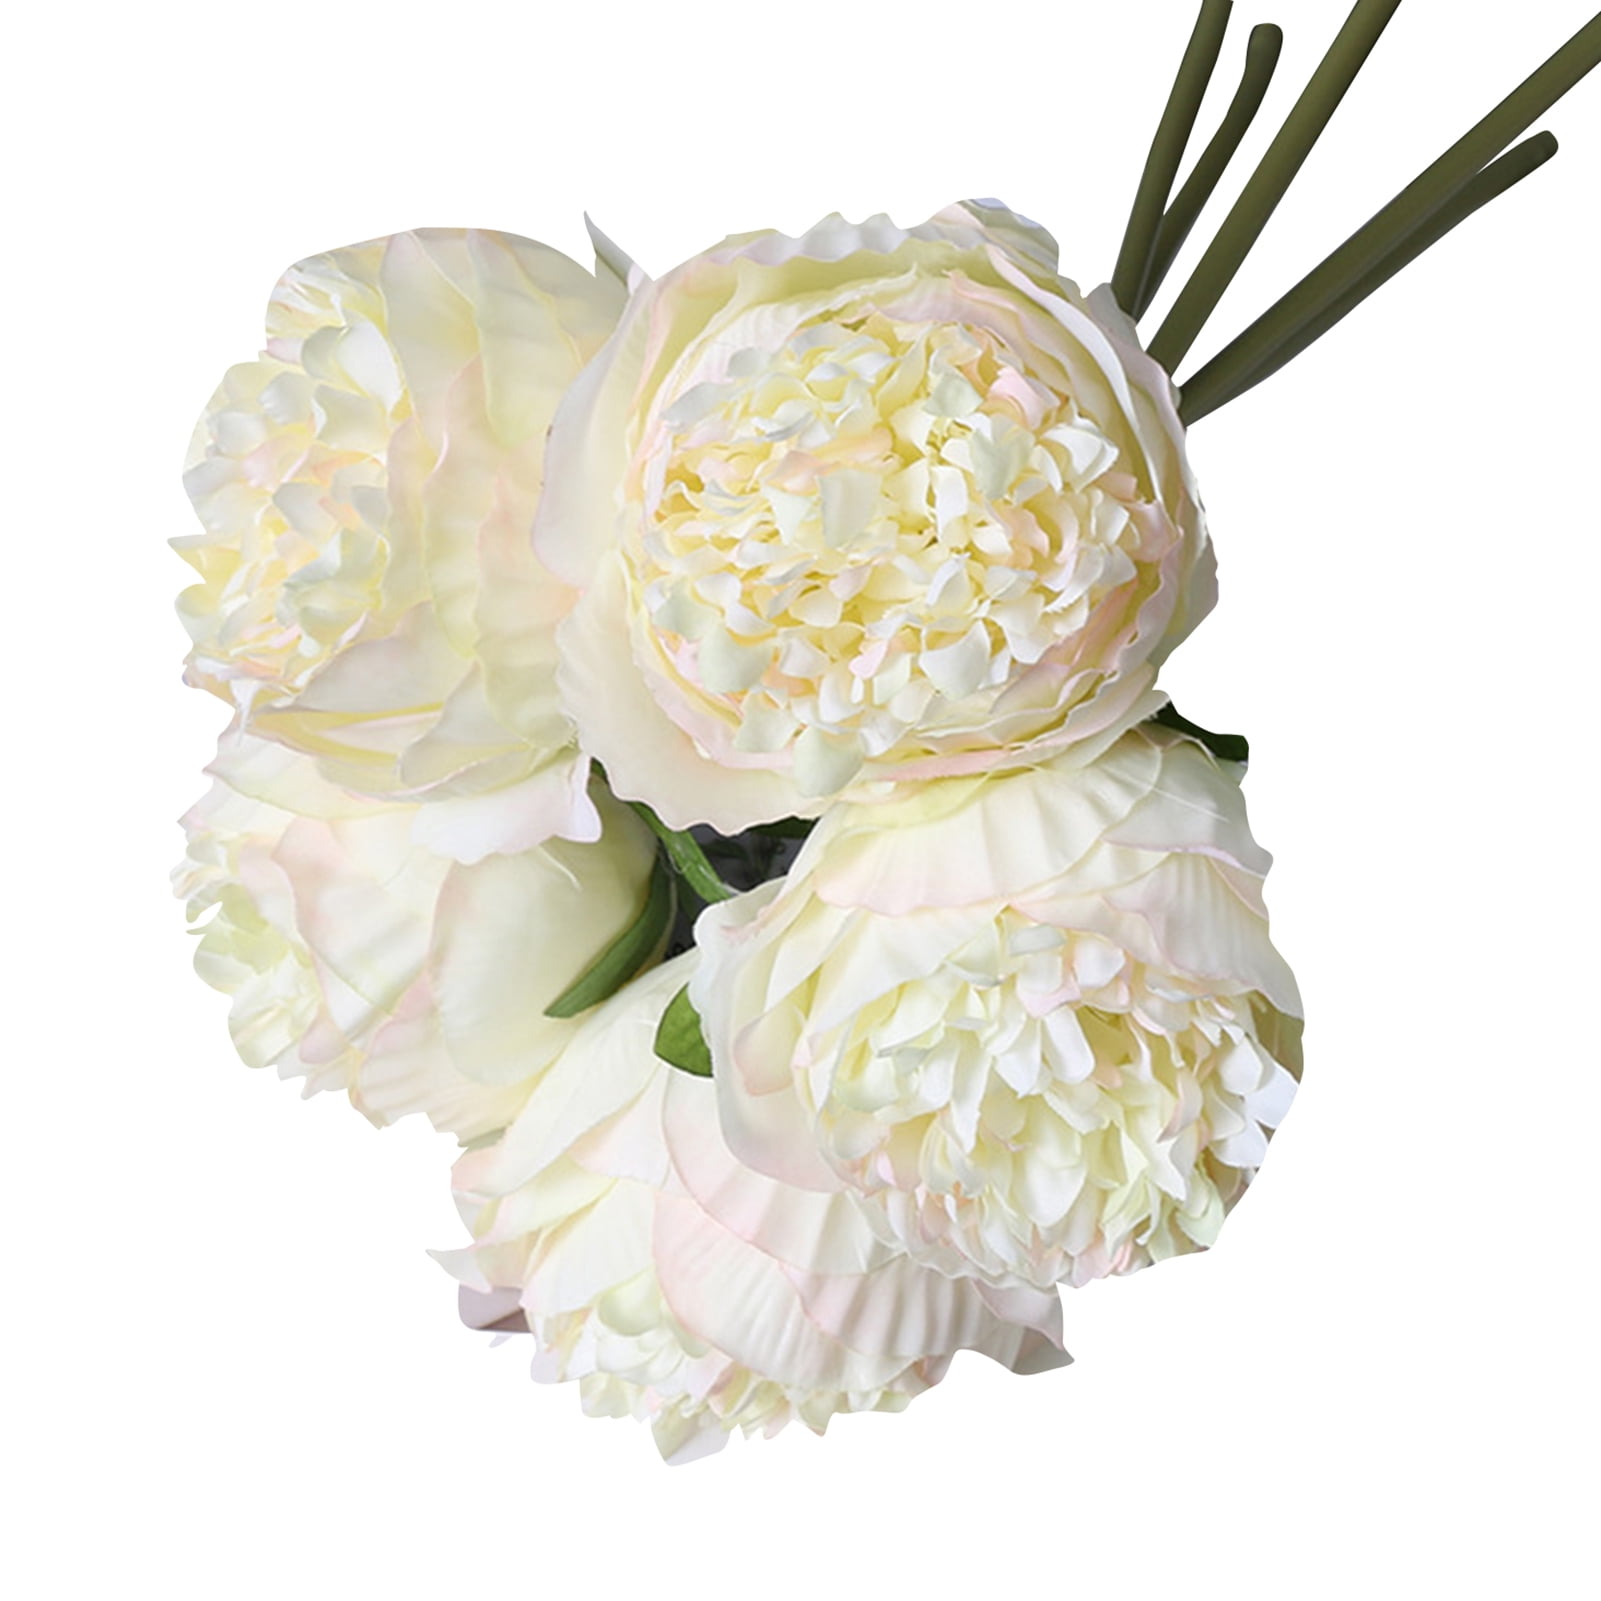 Details about   5pcs Artificial Flowers Silk Hydrangea Heads Backdrop Home Wedding Wall Decors 